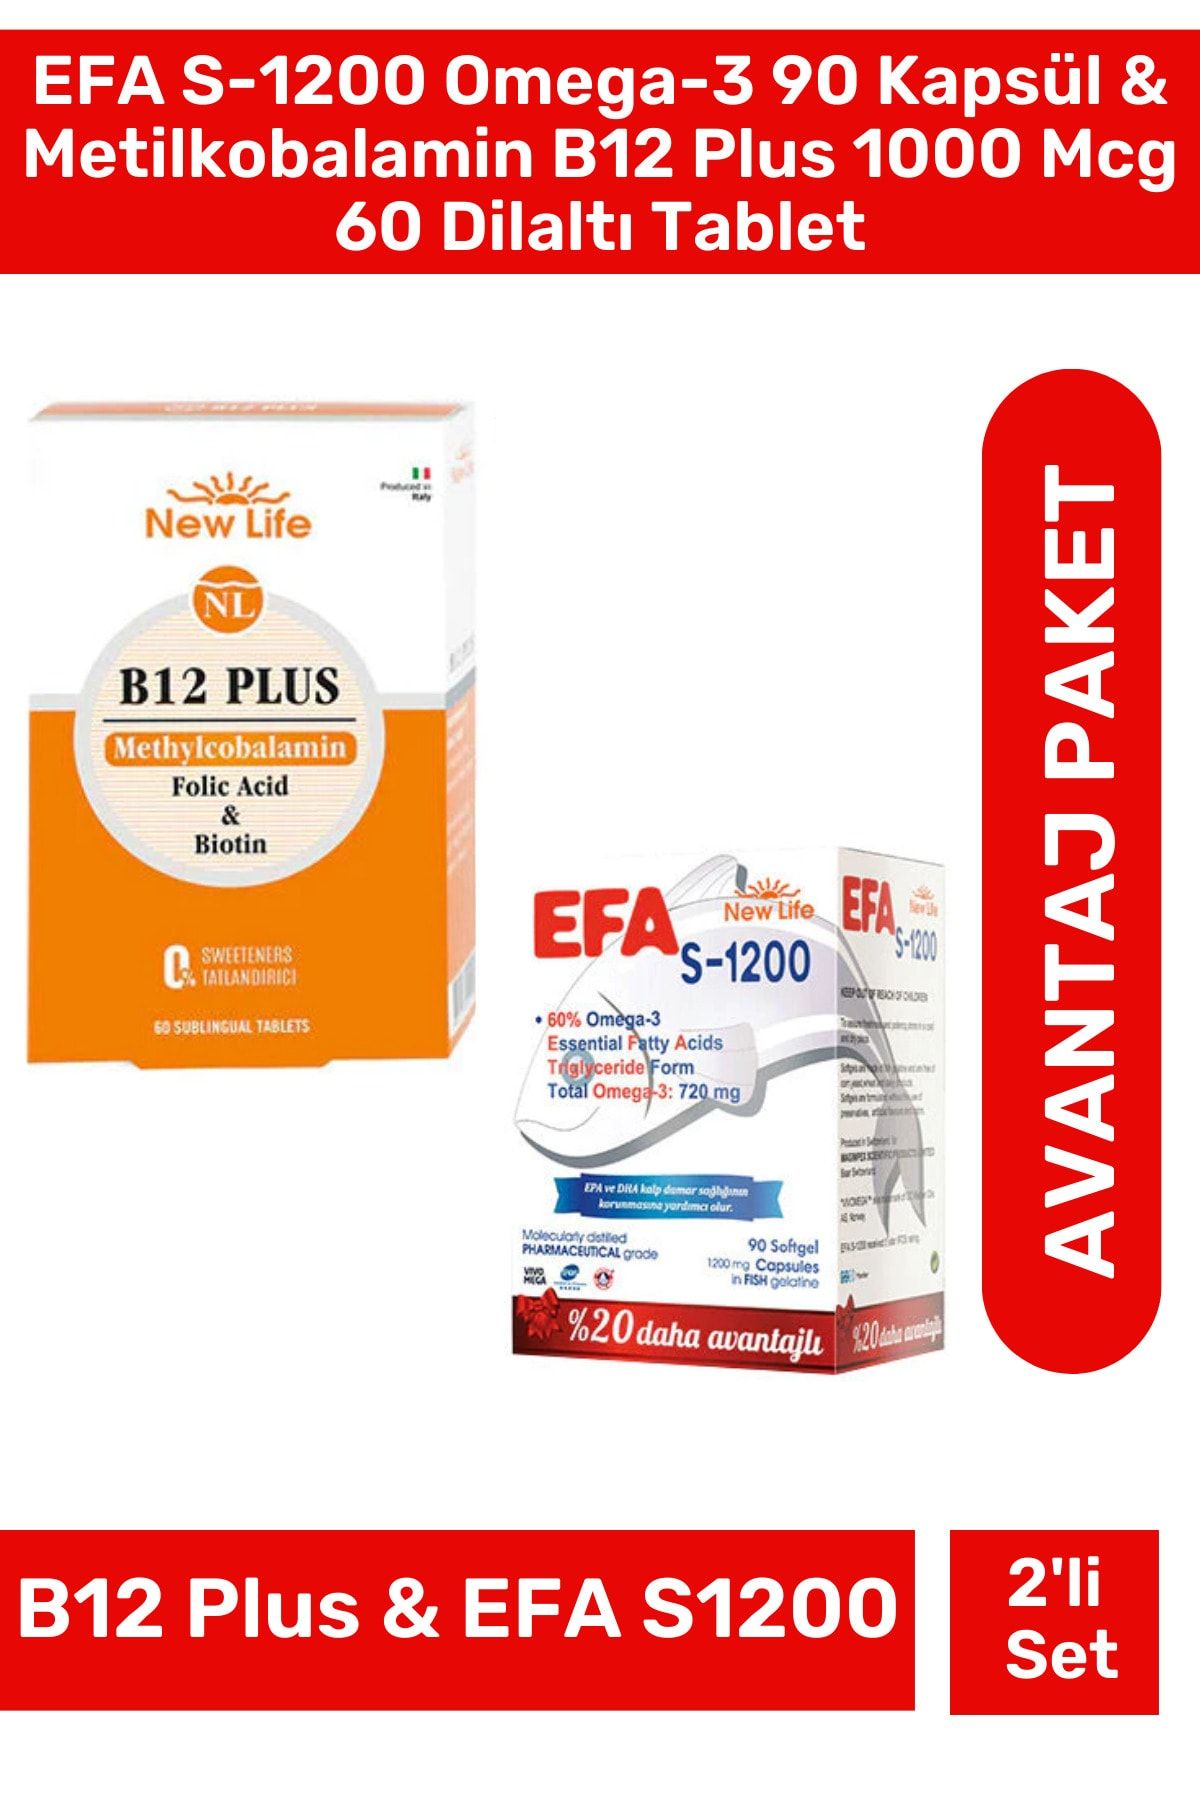 New Life Efa S-1200 Omega-3 90 Kapsül & Metilkobalamin B12 Plus 1000 Mcg 60 Dilaltı Tablet